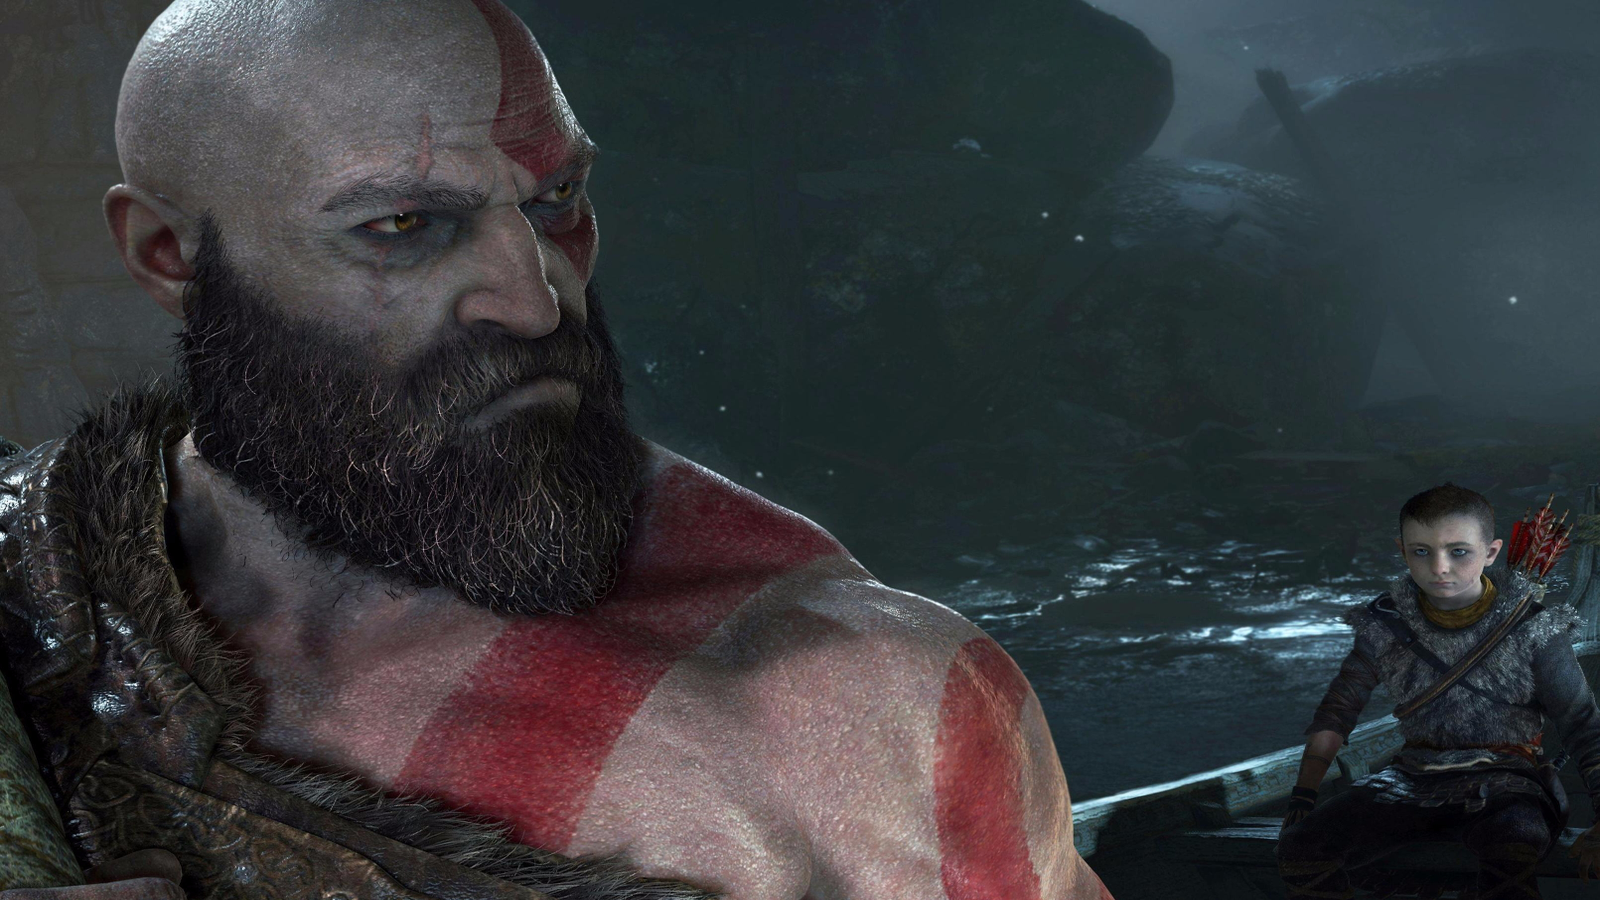 God Of War Ragnarok Leaked Gameplay Footage Surfaces Online